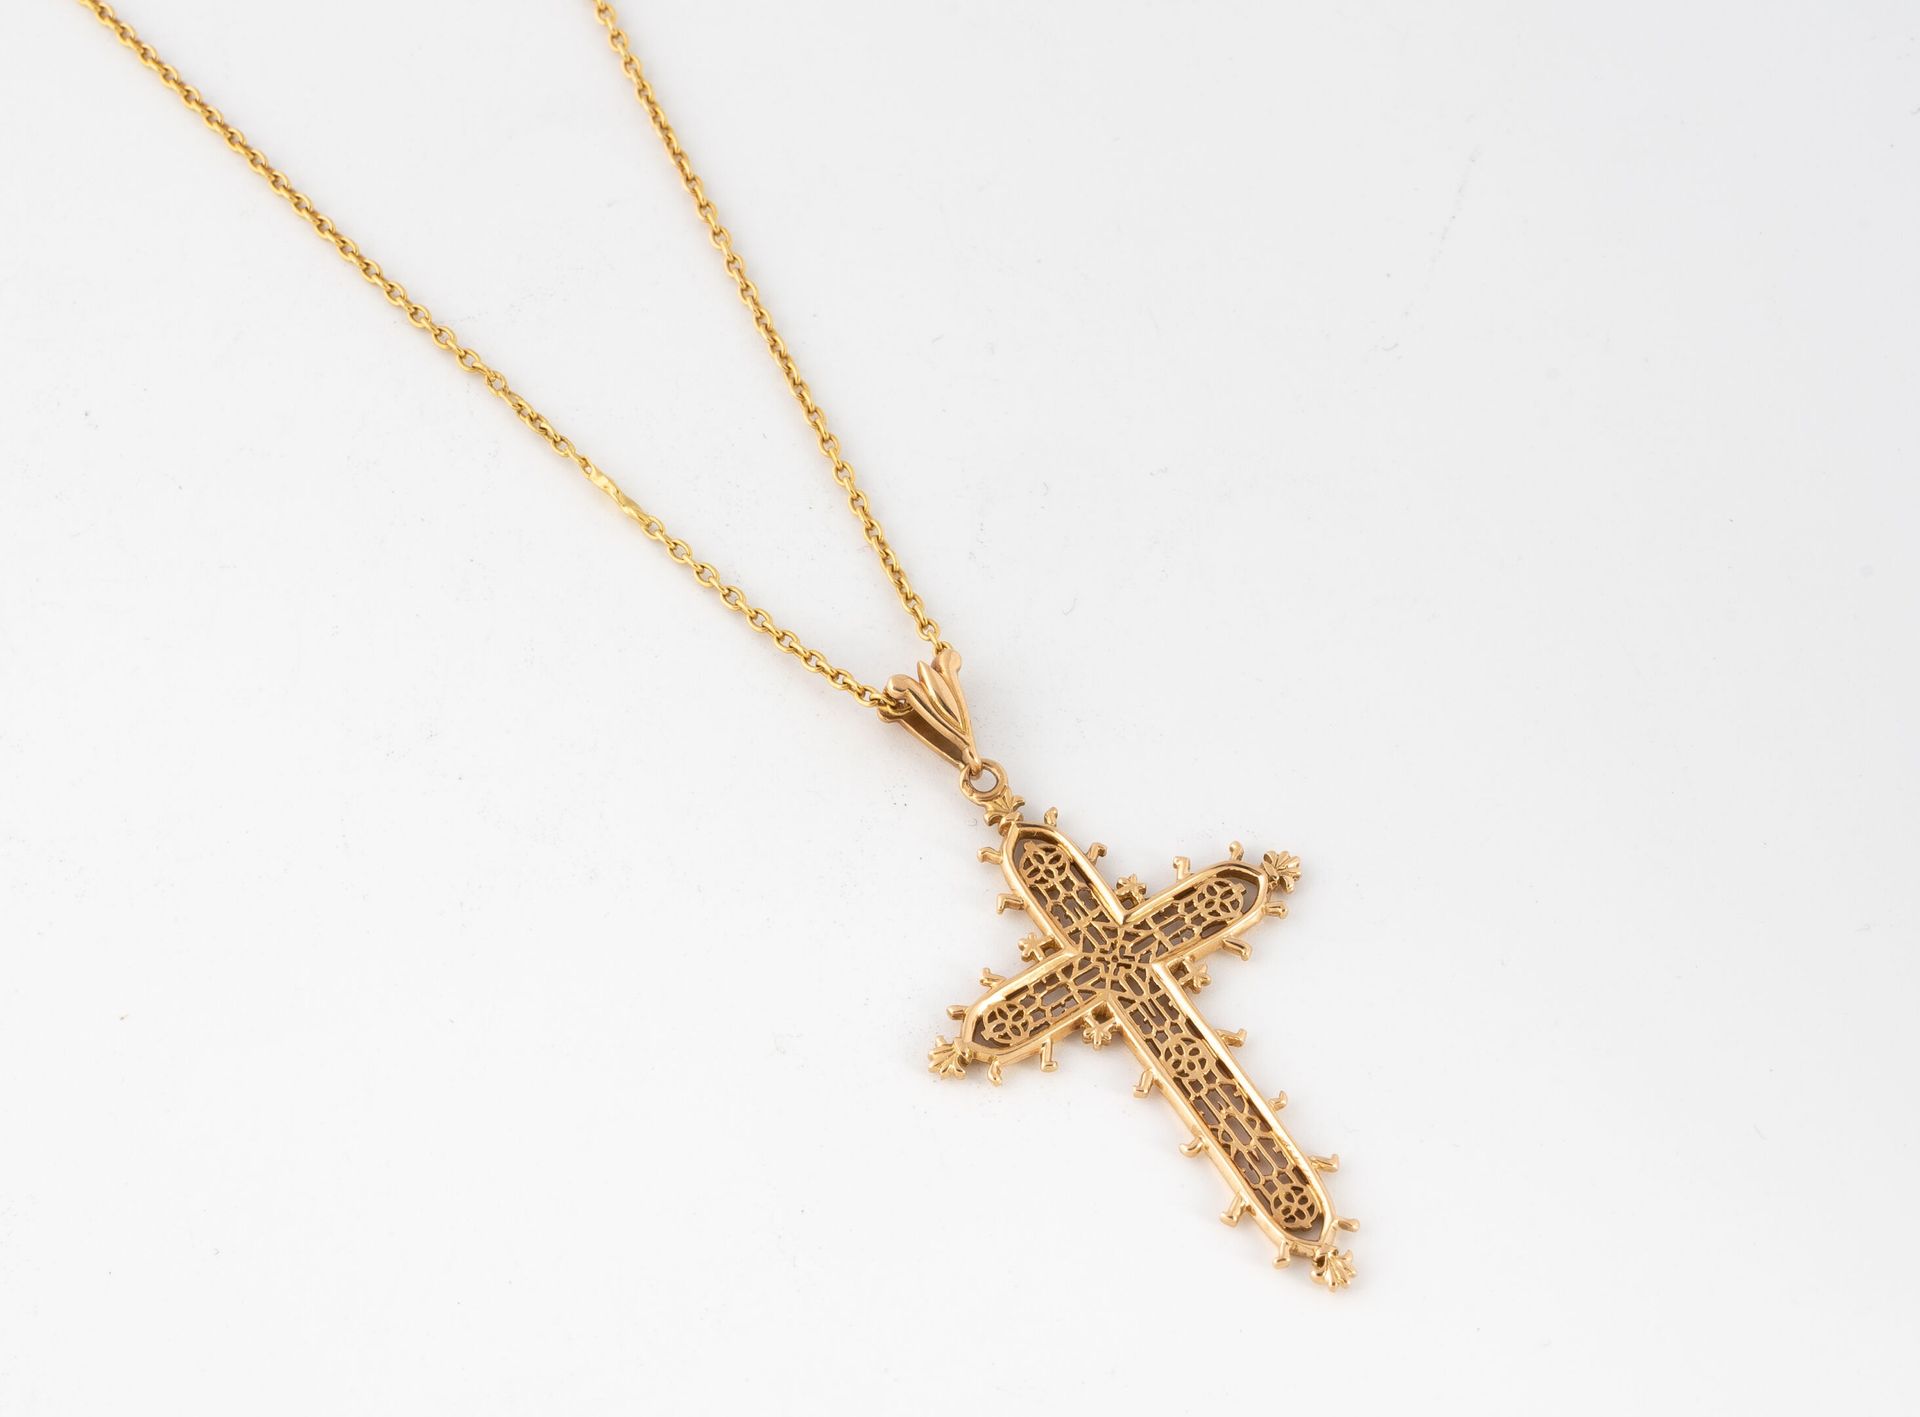 Null 黄金（750）丝状十字架和黄金（750）链。 
镀金(925)表扣。
毛重：7.35克。- 链长：42厘米 - 十字架高：4厘米
链条的修复情况。